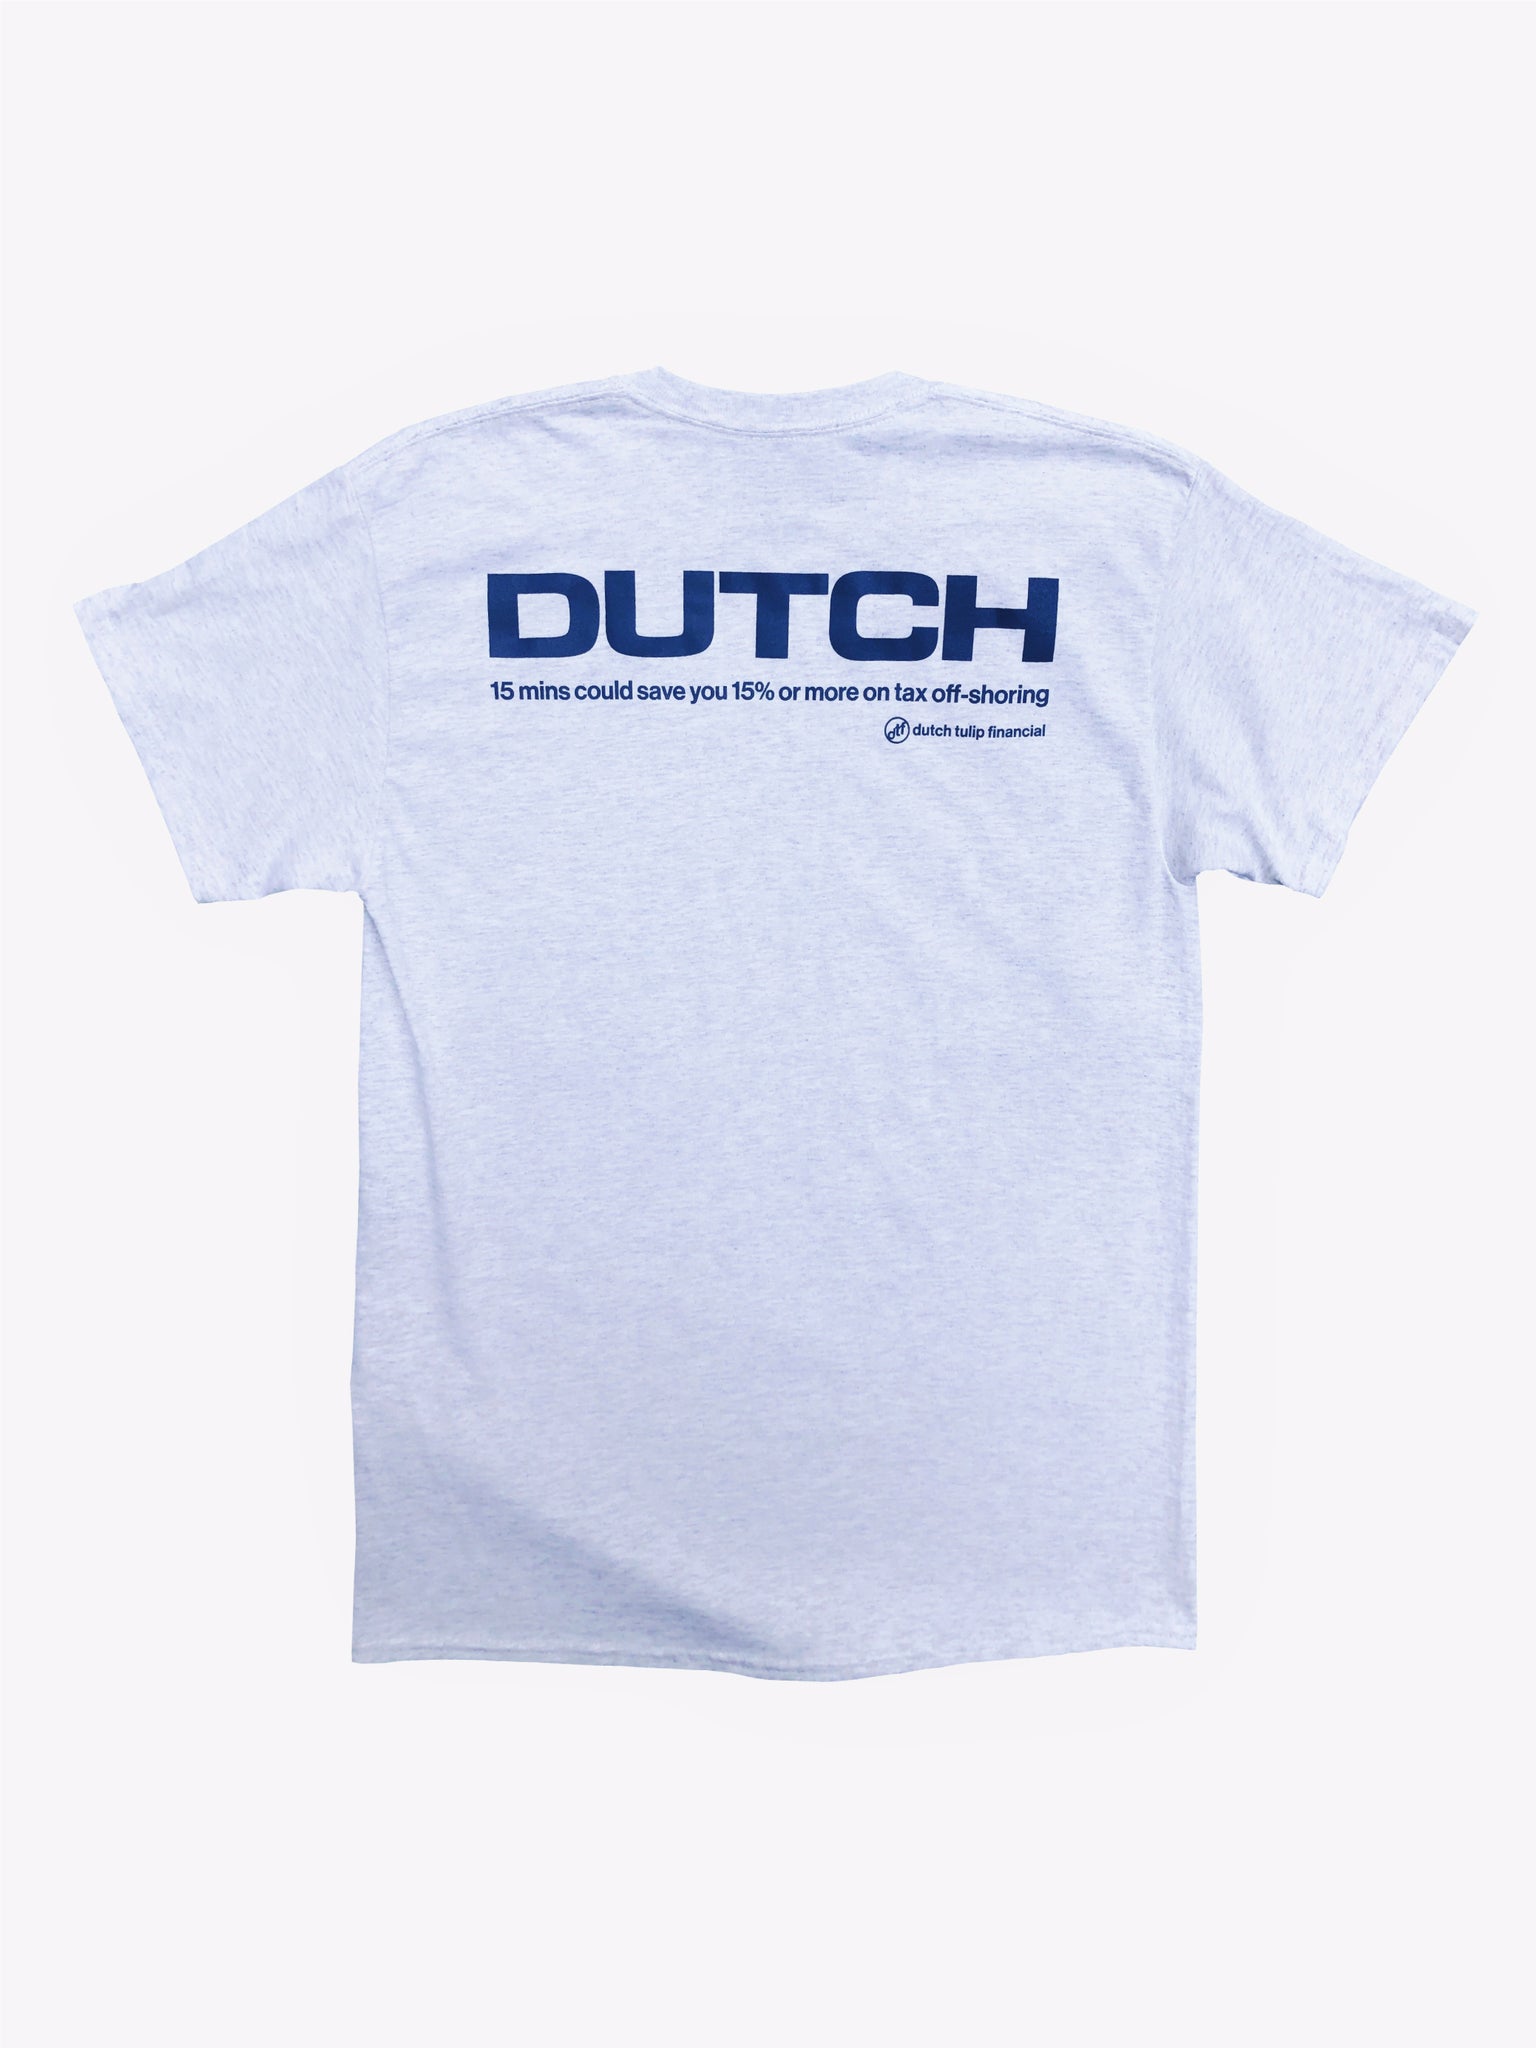 Geico Dutch Tee - Gray